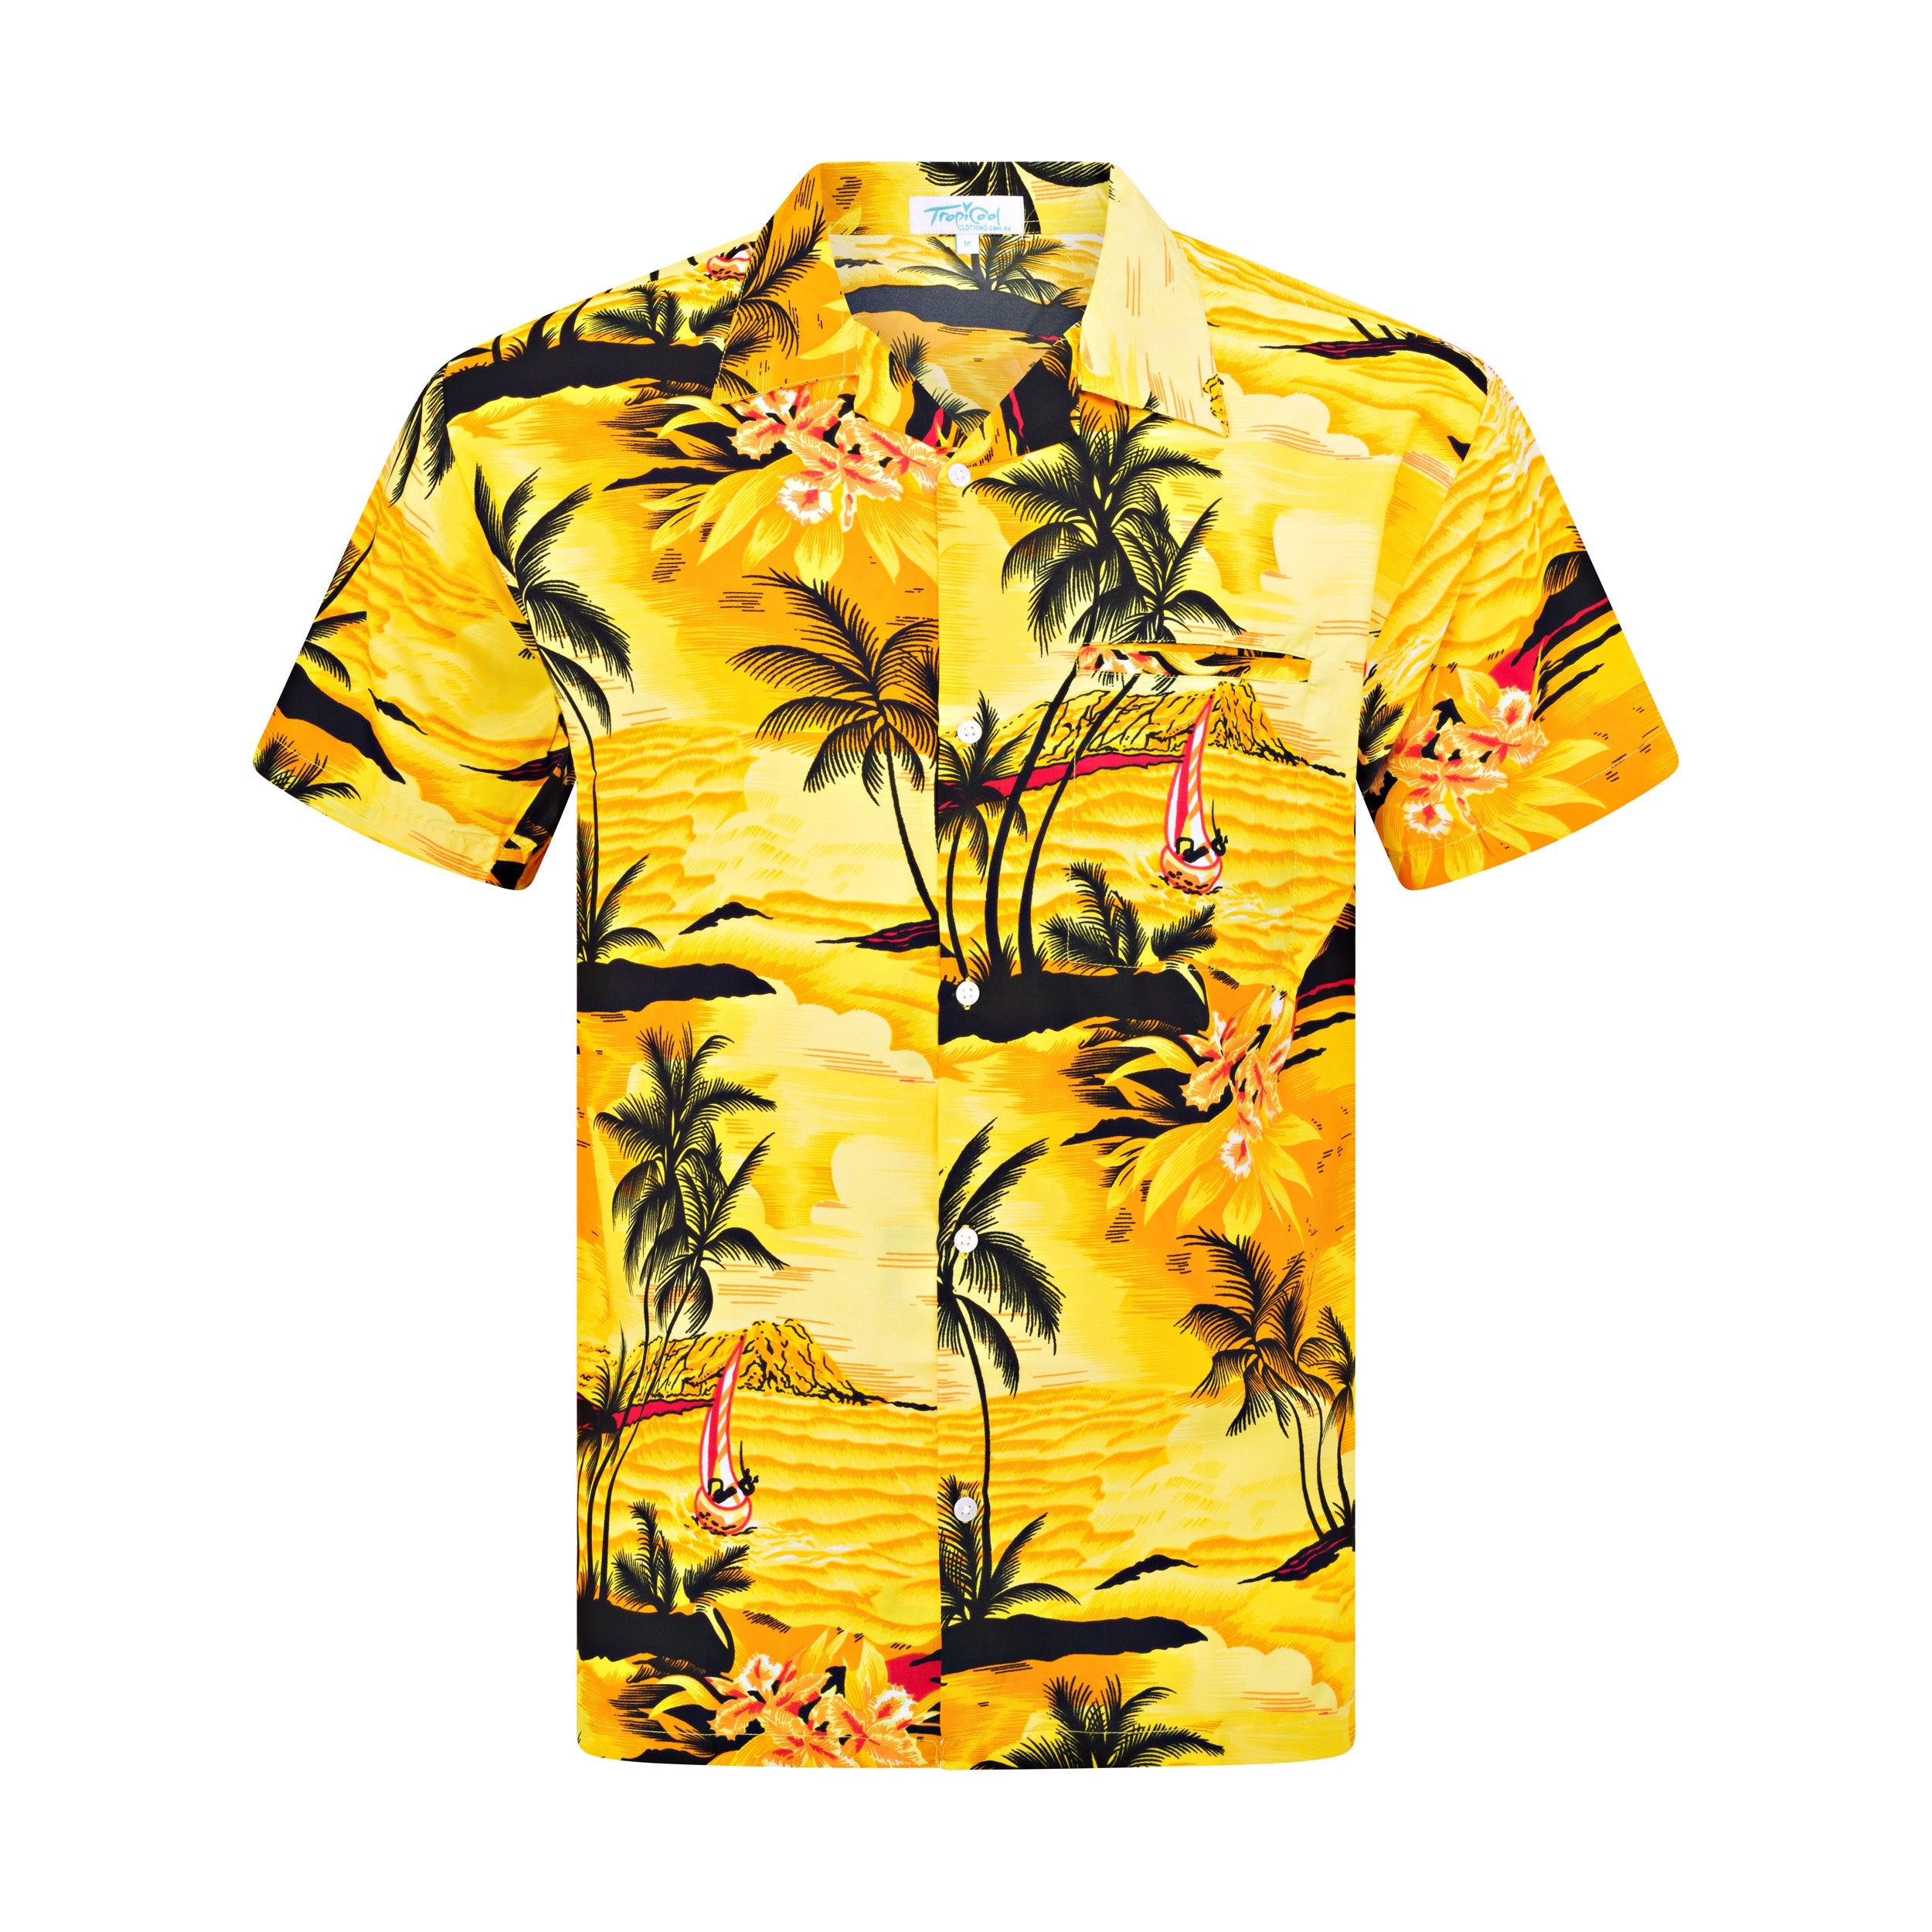 Sunset Yellow Adult Shirt